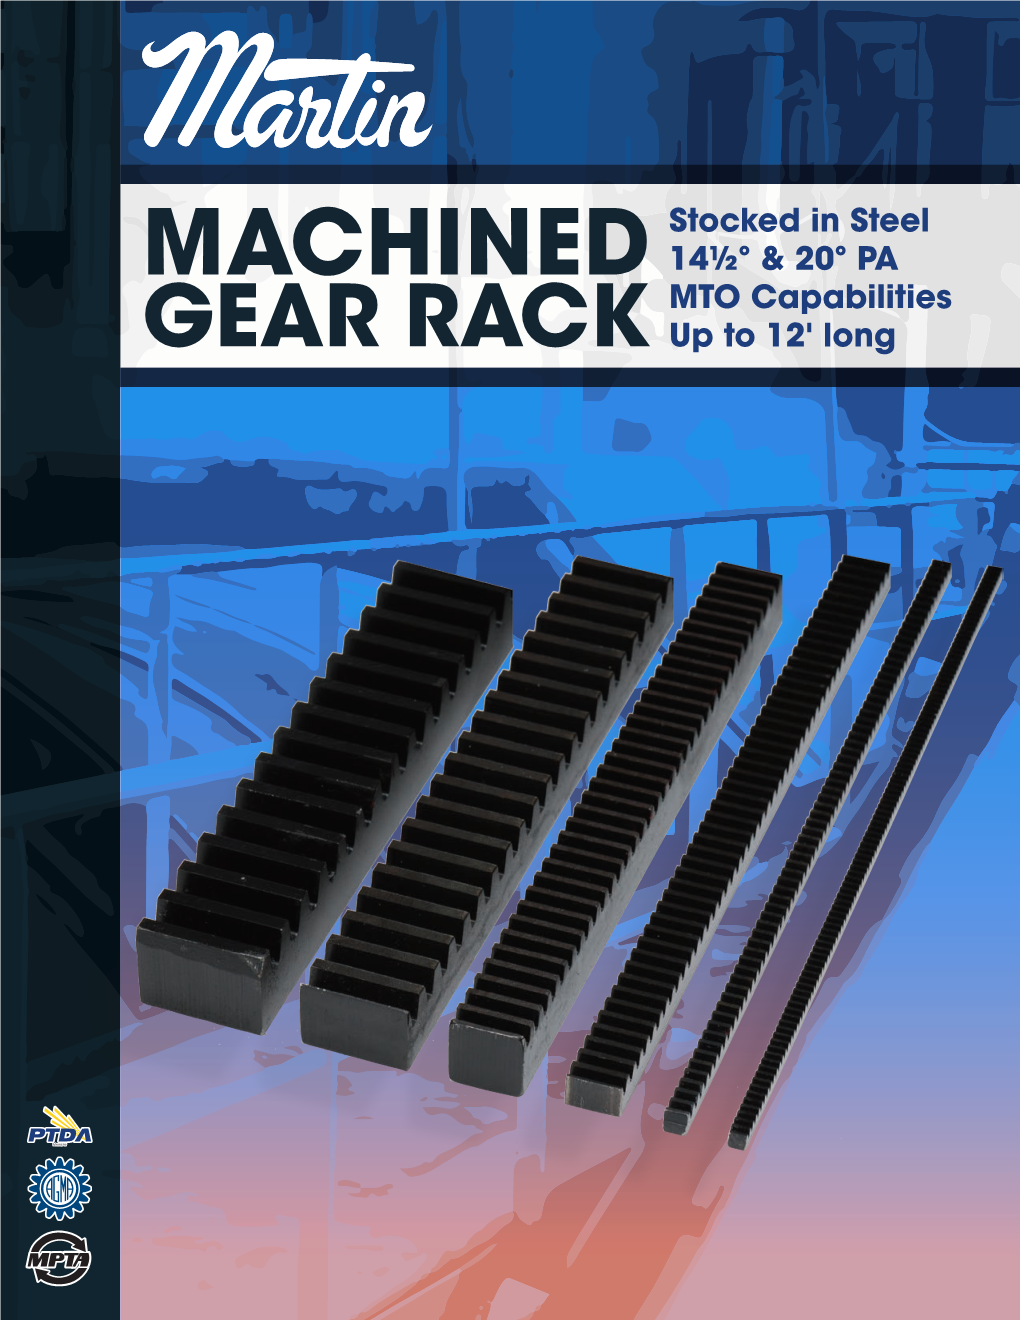 Martin Machined Gear Rack Brochure